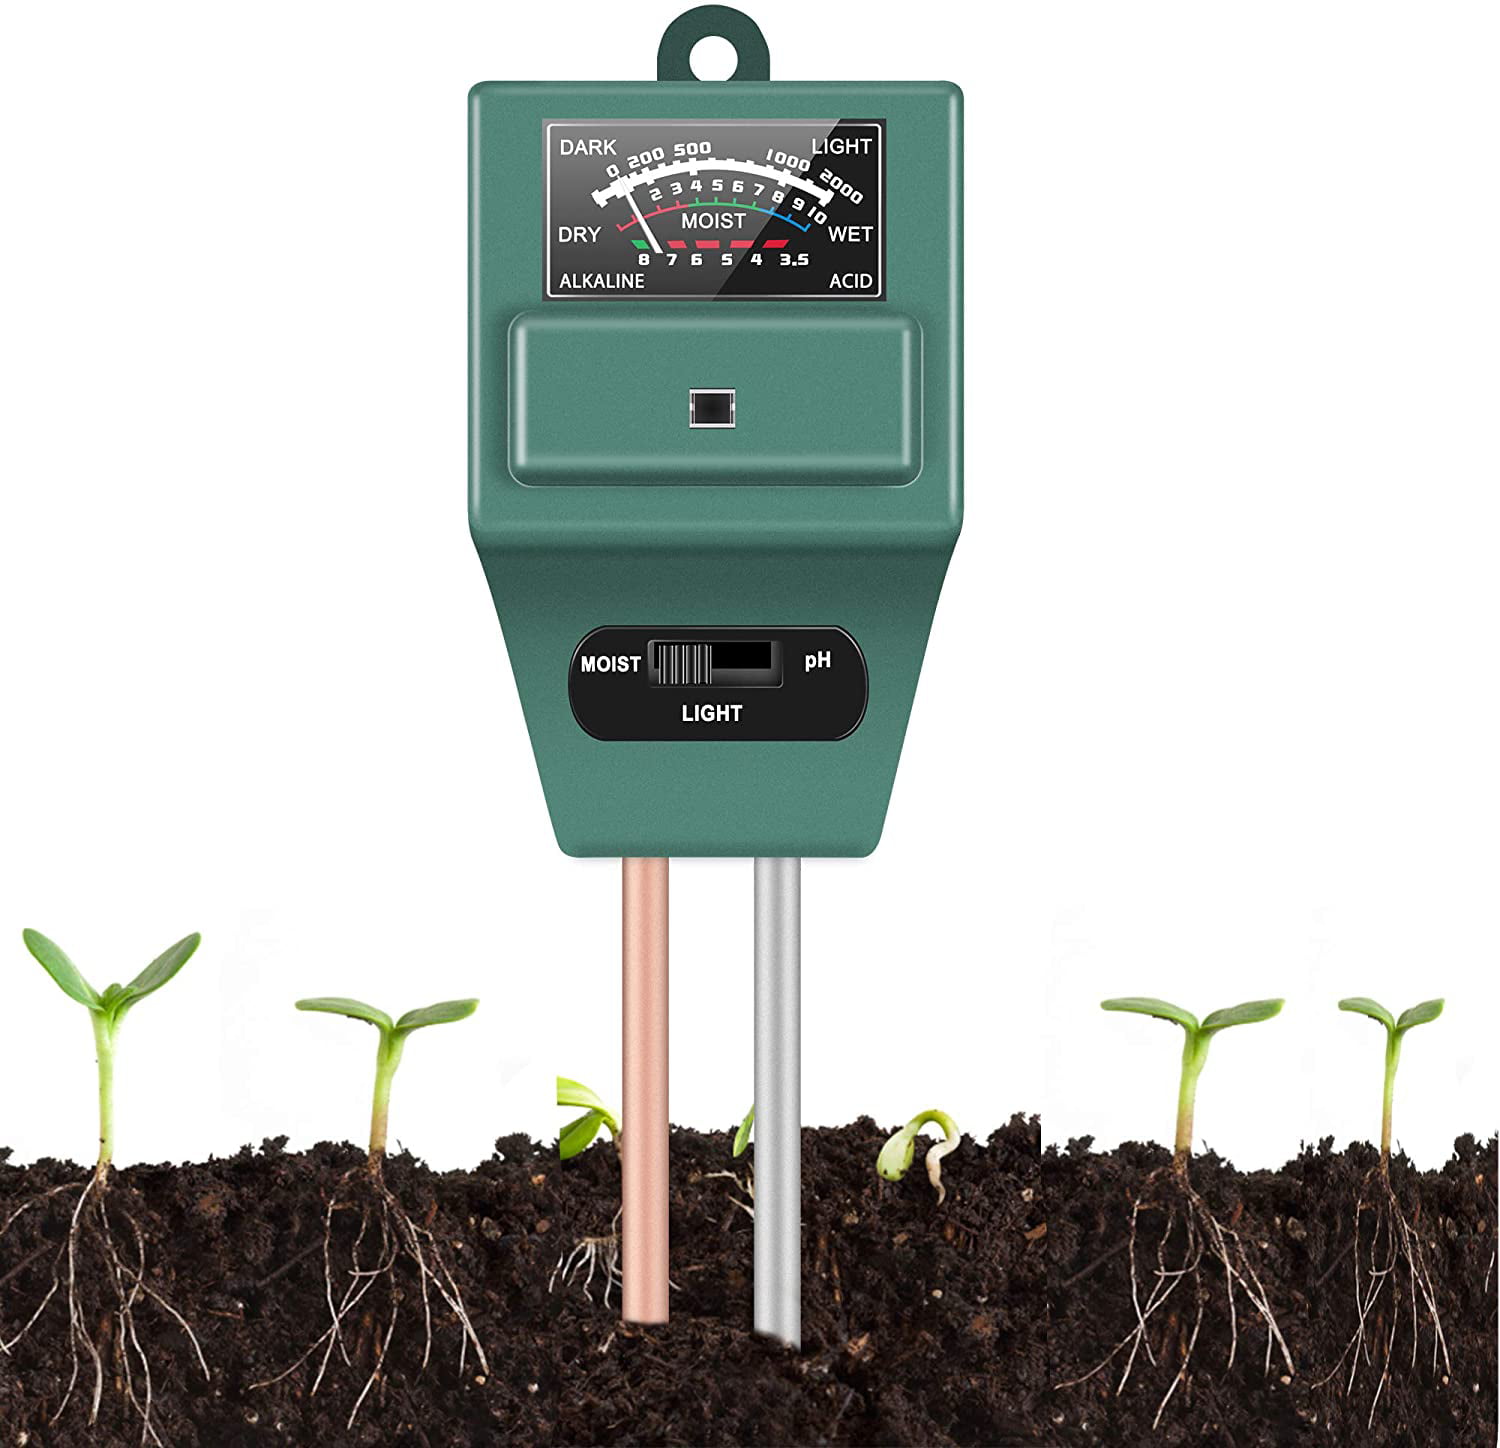 RIIEYOCA Capacitive Soil Moisture Sensor 2pcs Detection Garden Watering DIY Indoor Outdoor Plant Care Soil Tester